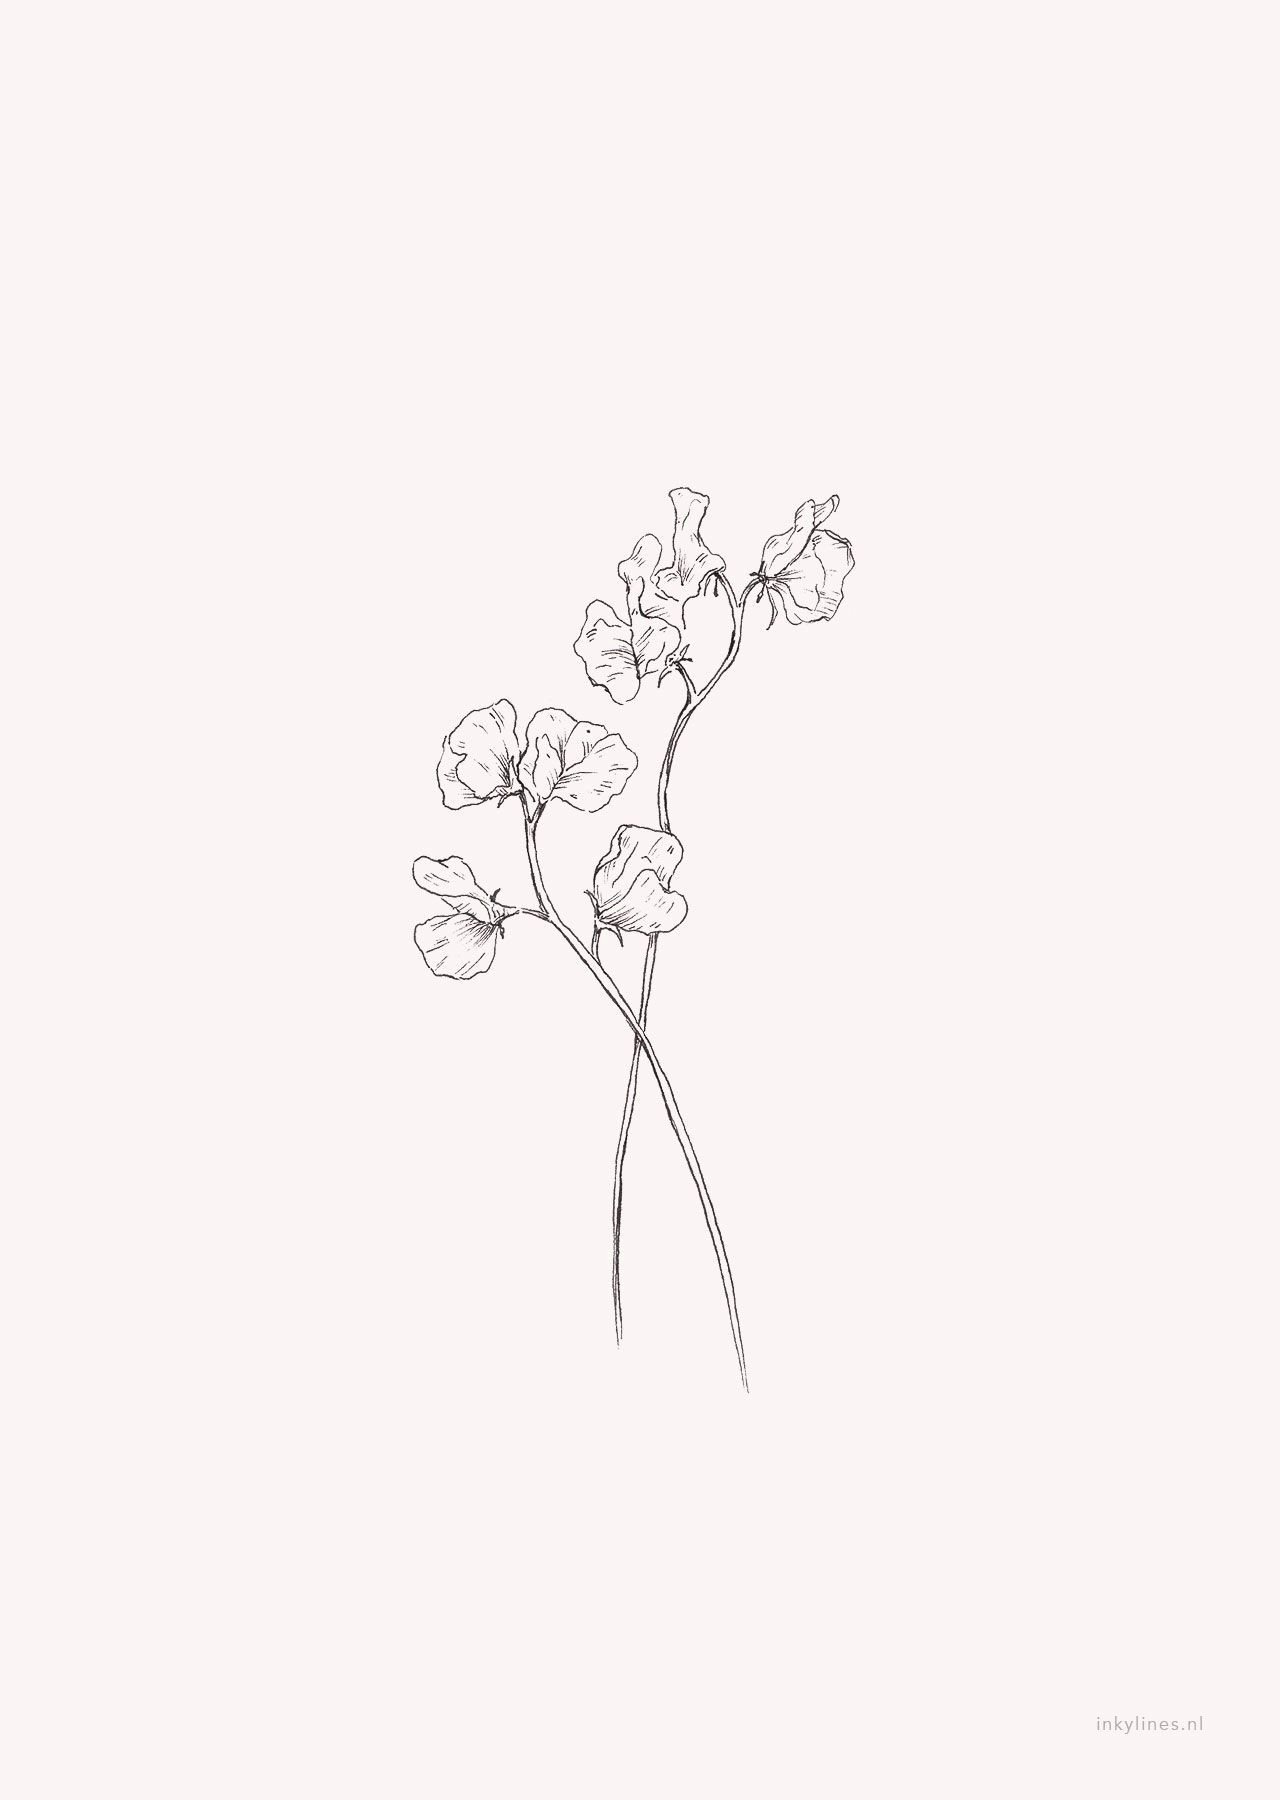 A Beautiful Drawing Of Flowers Sweet Pea In 2019 Journal Drawings Flowers Art